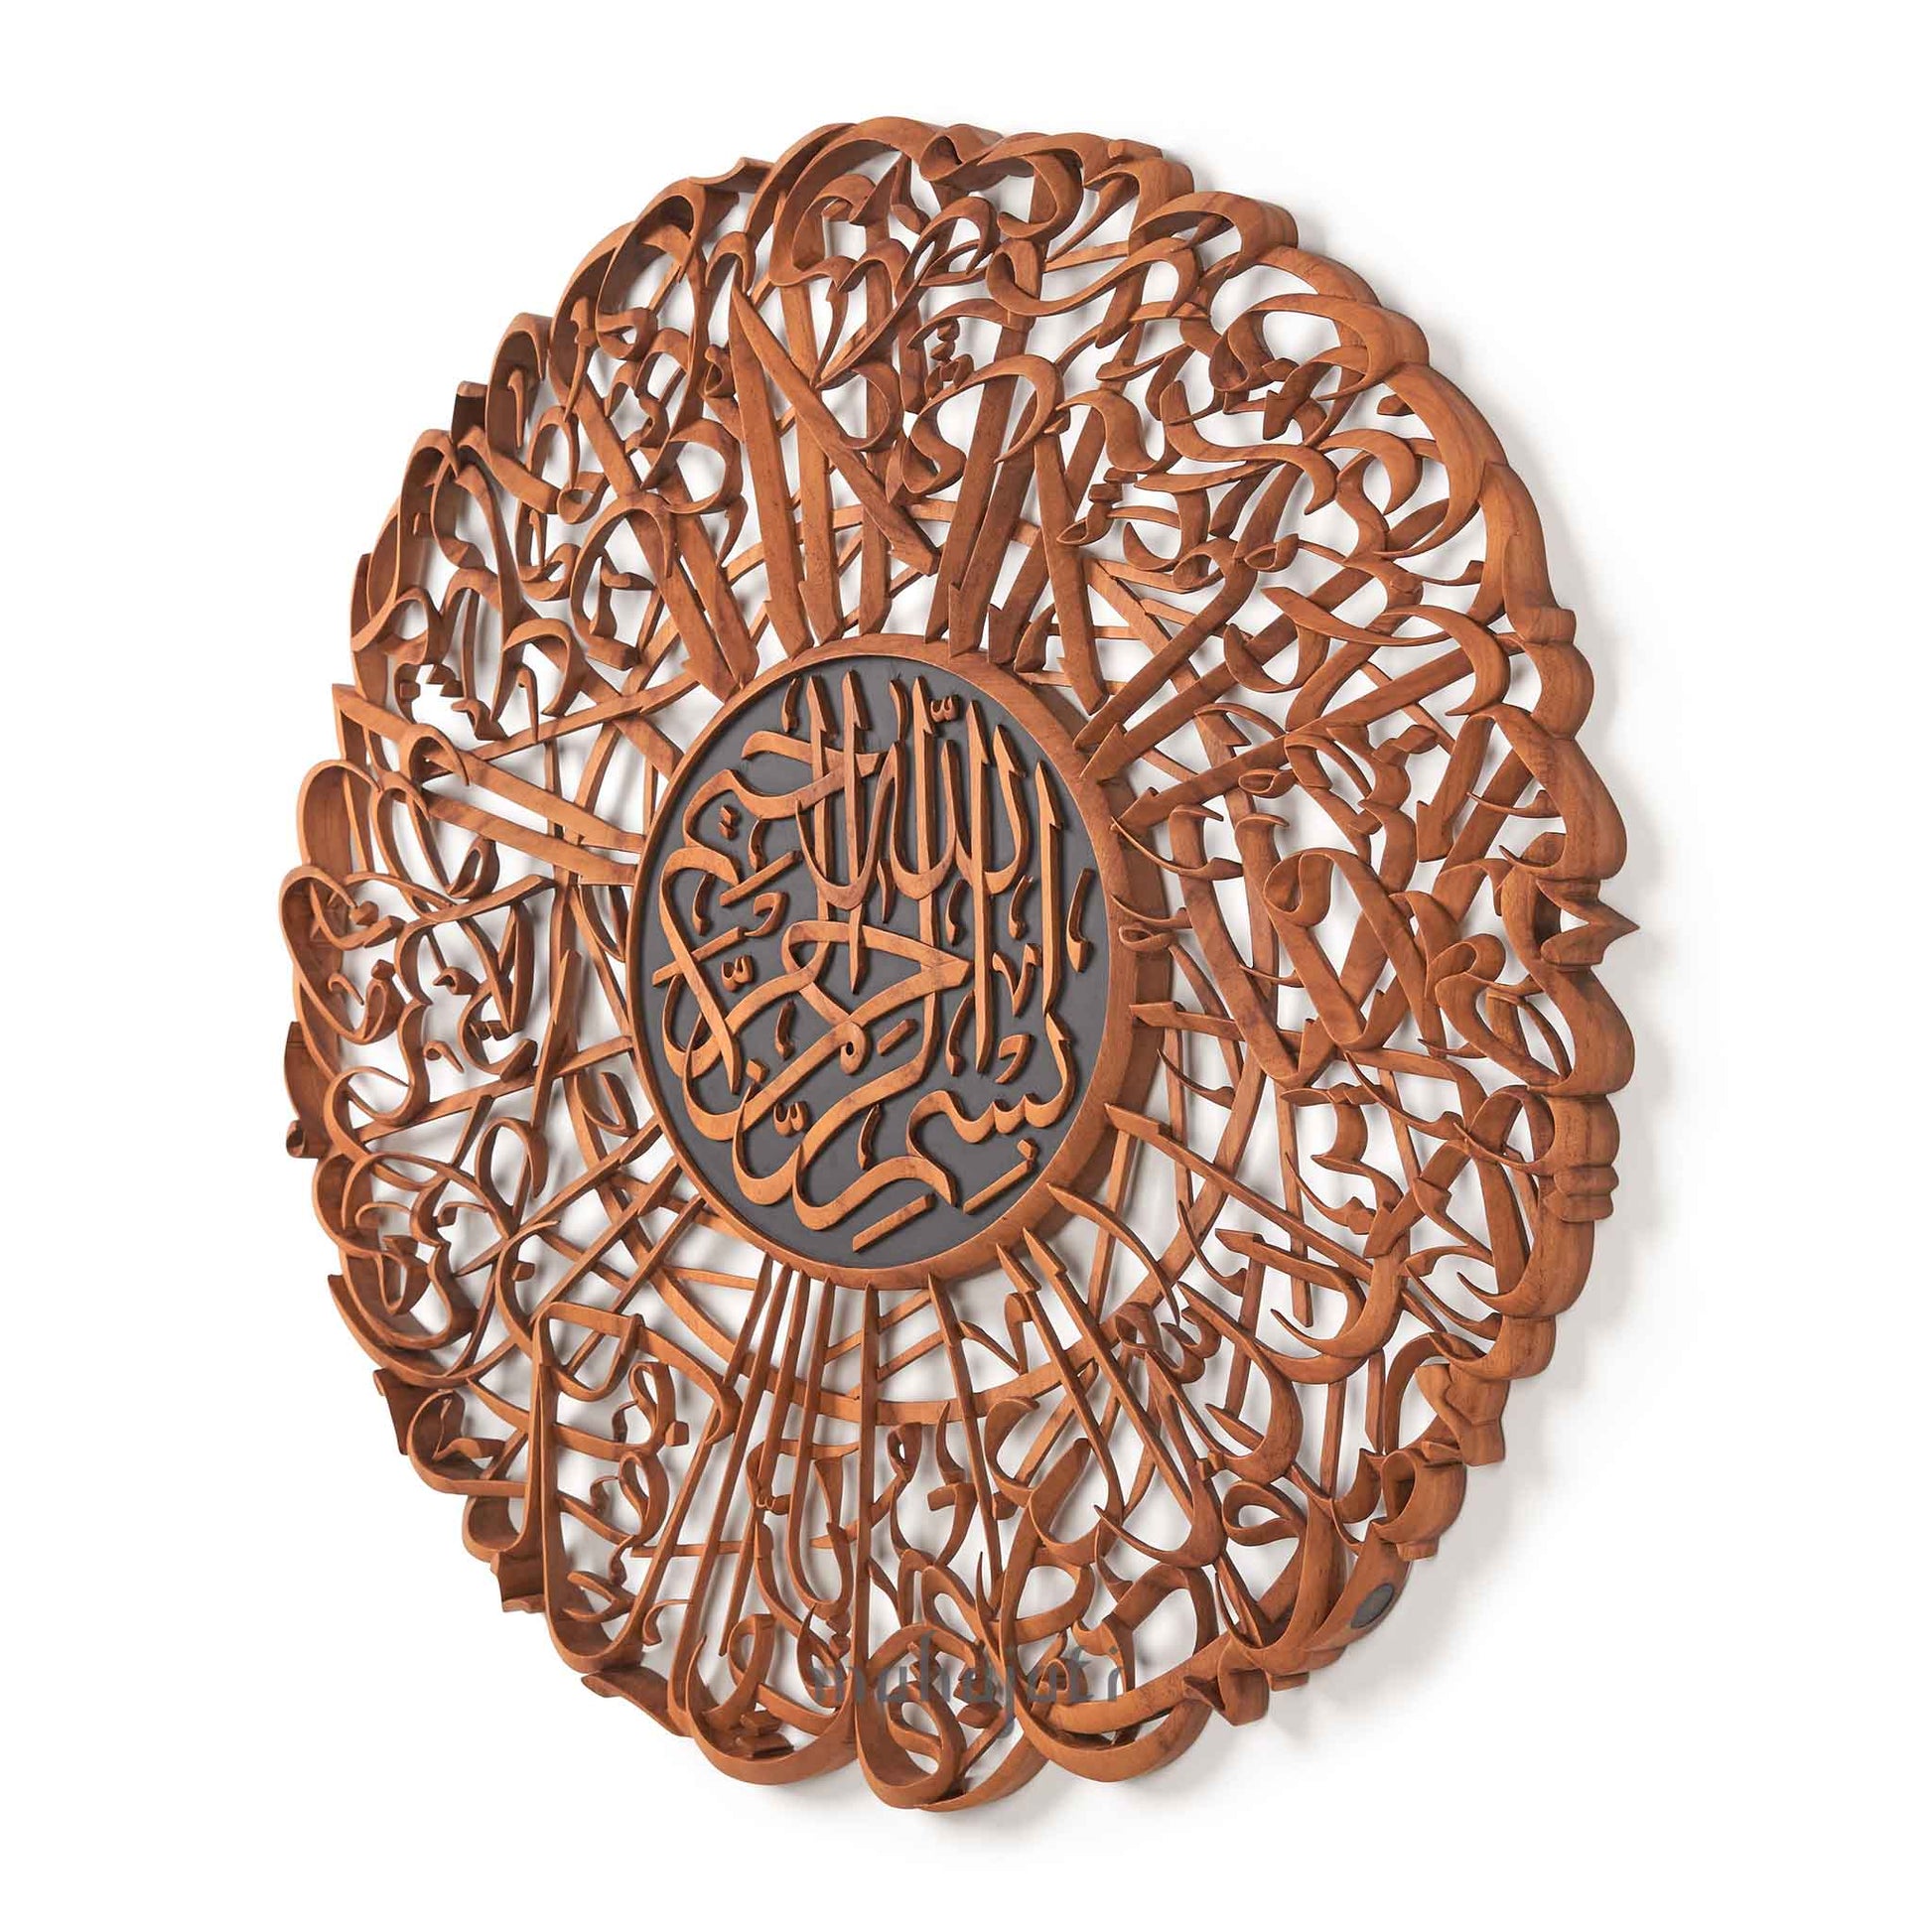 Al-Kafirun / Bismillah Arabic Calligraphy Wood Carving Wall Art